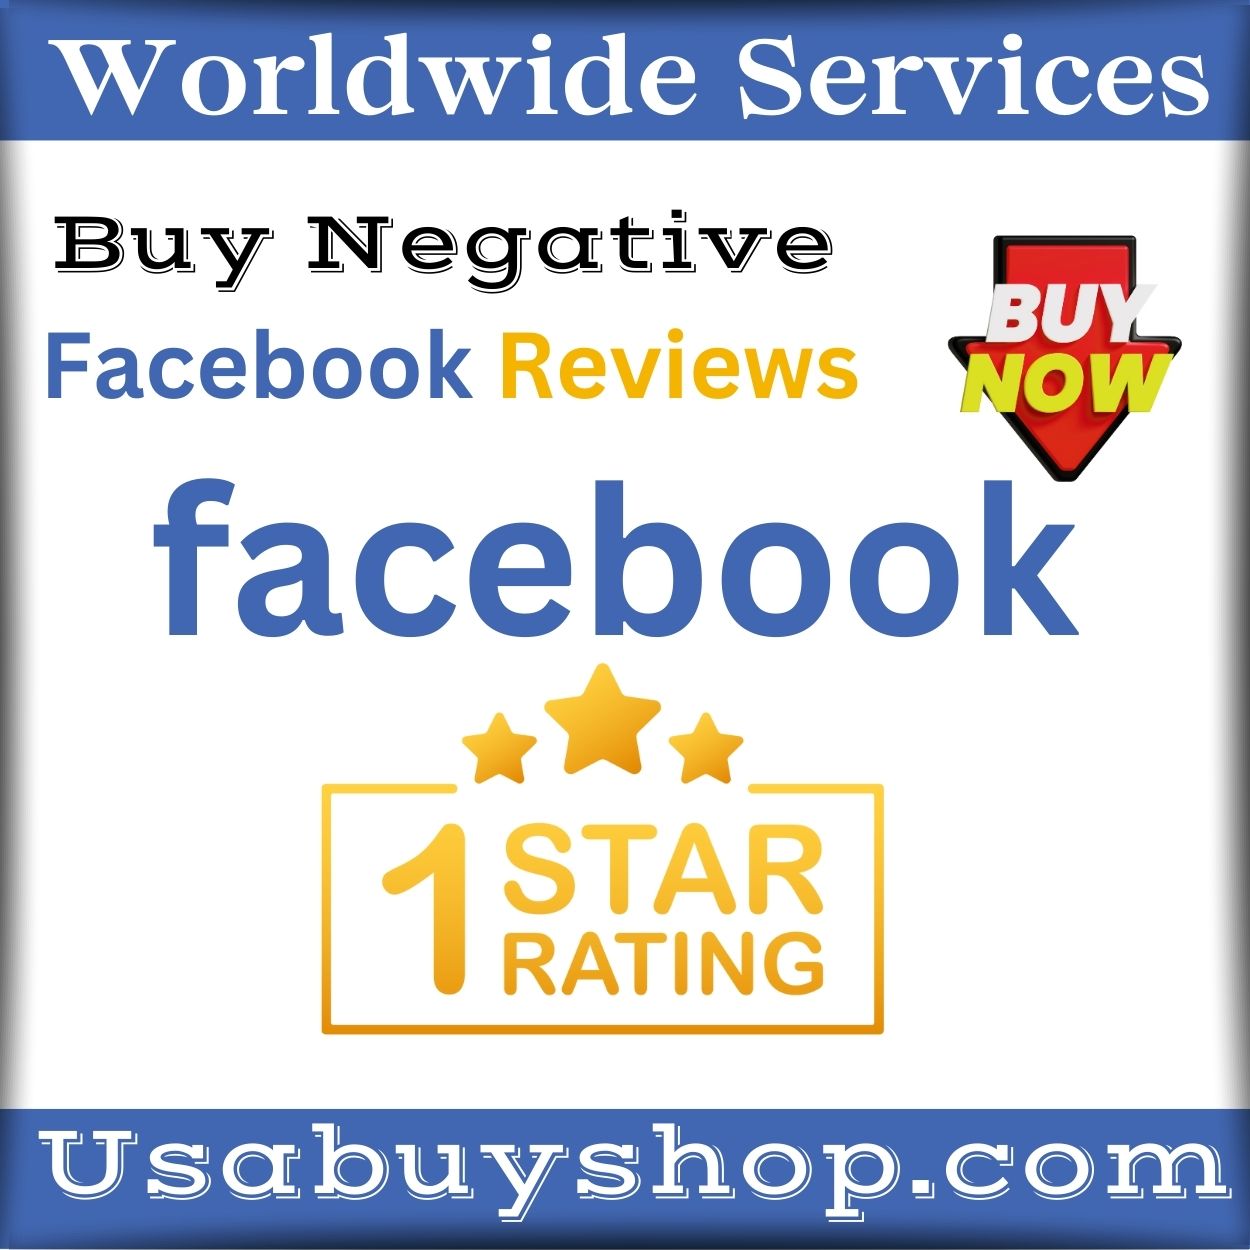 Buy Negative Facebook Reviews | Buy 1-star Rating Reviews